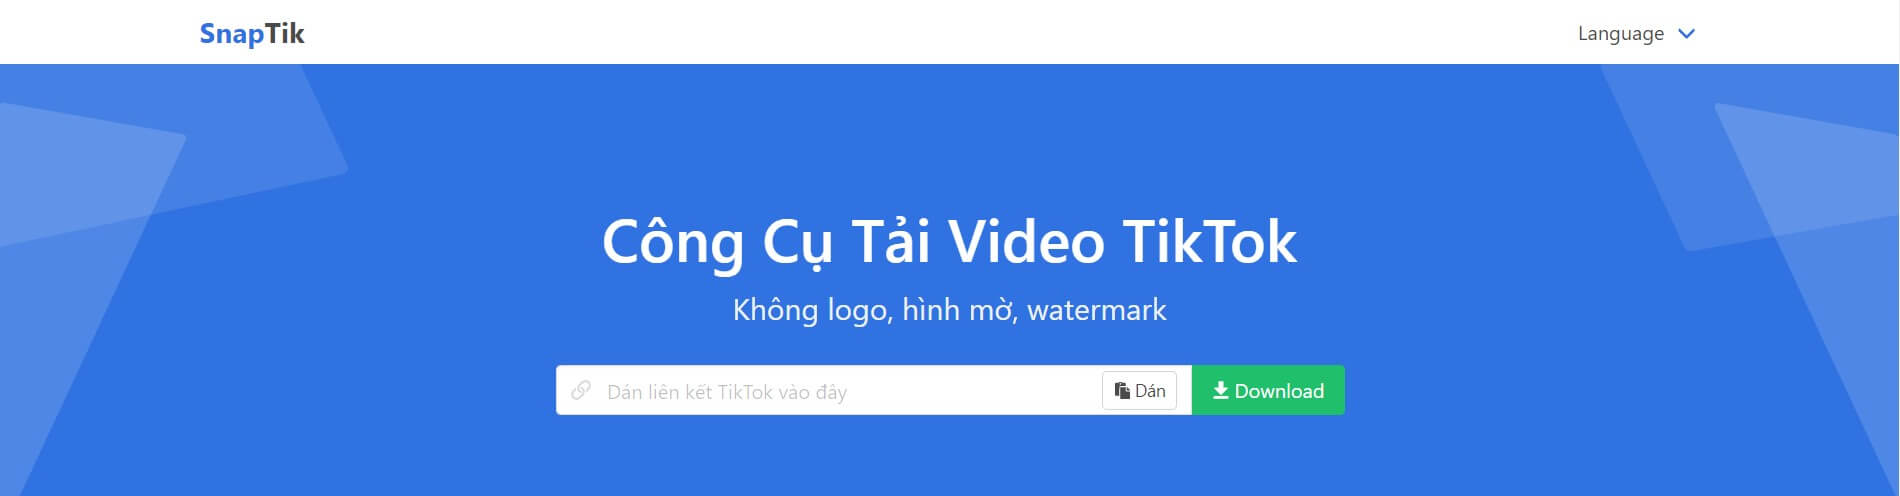 snaptik-tai-xuong-video-tren-tiktok-douyin-khong-co-logo